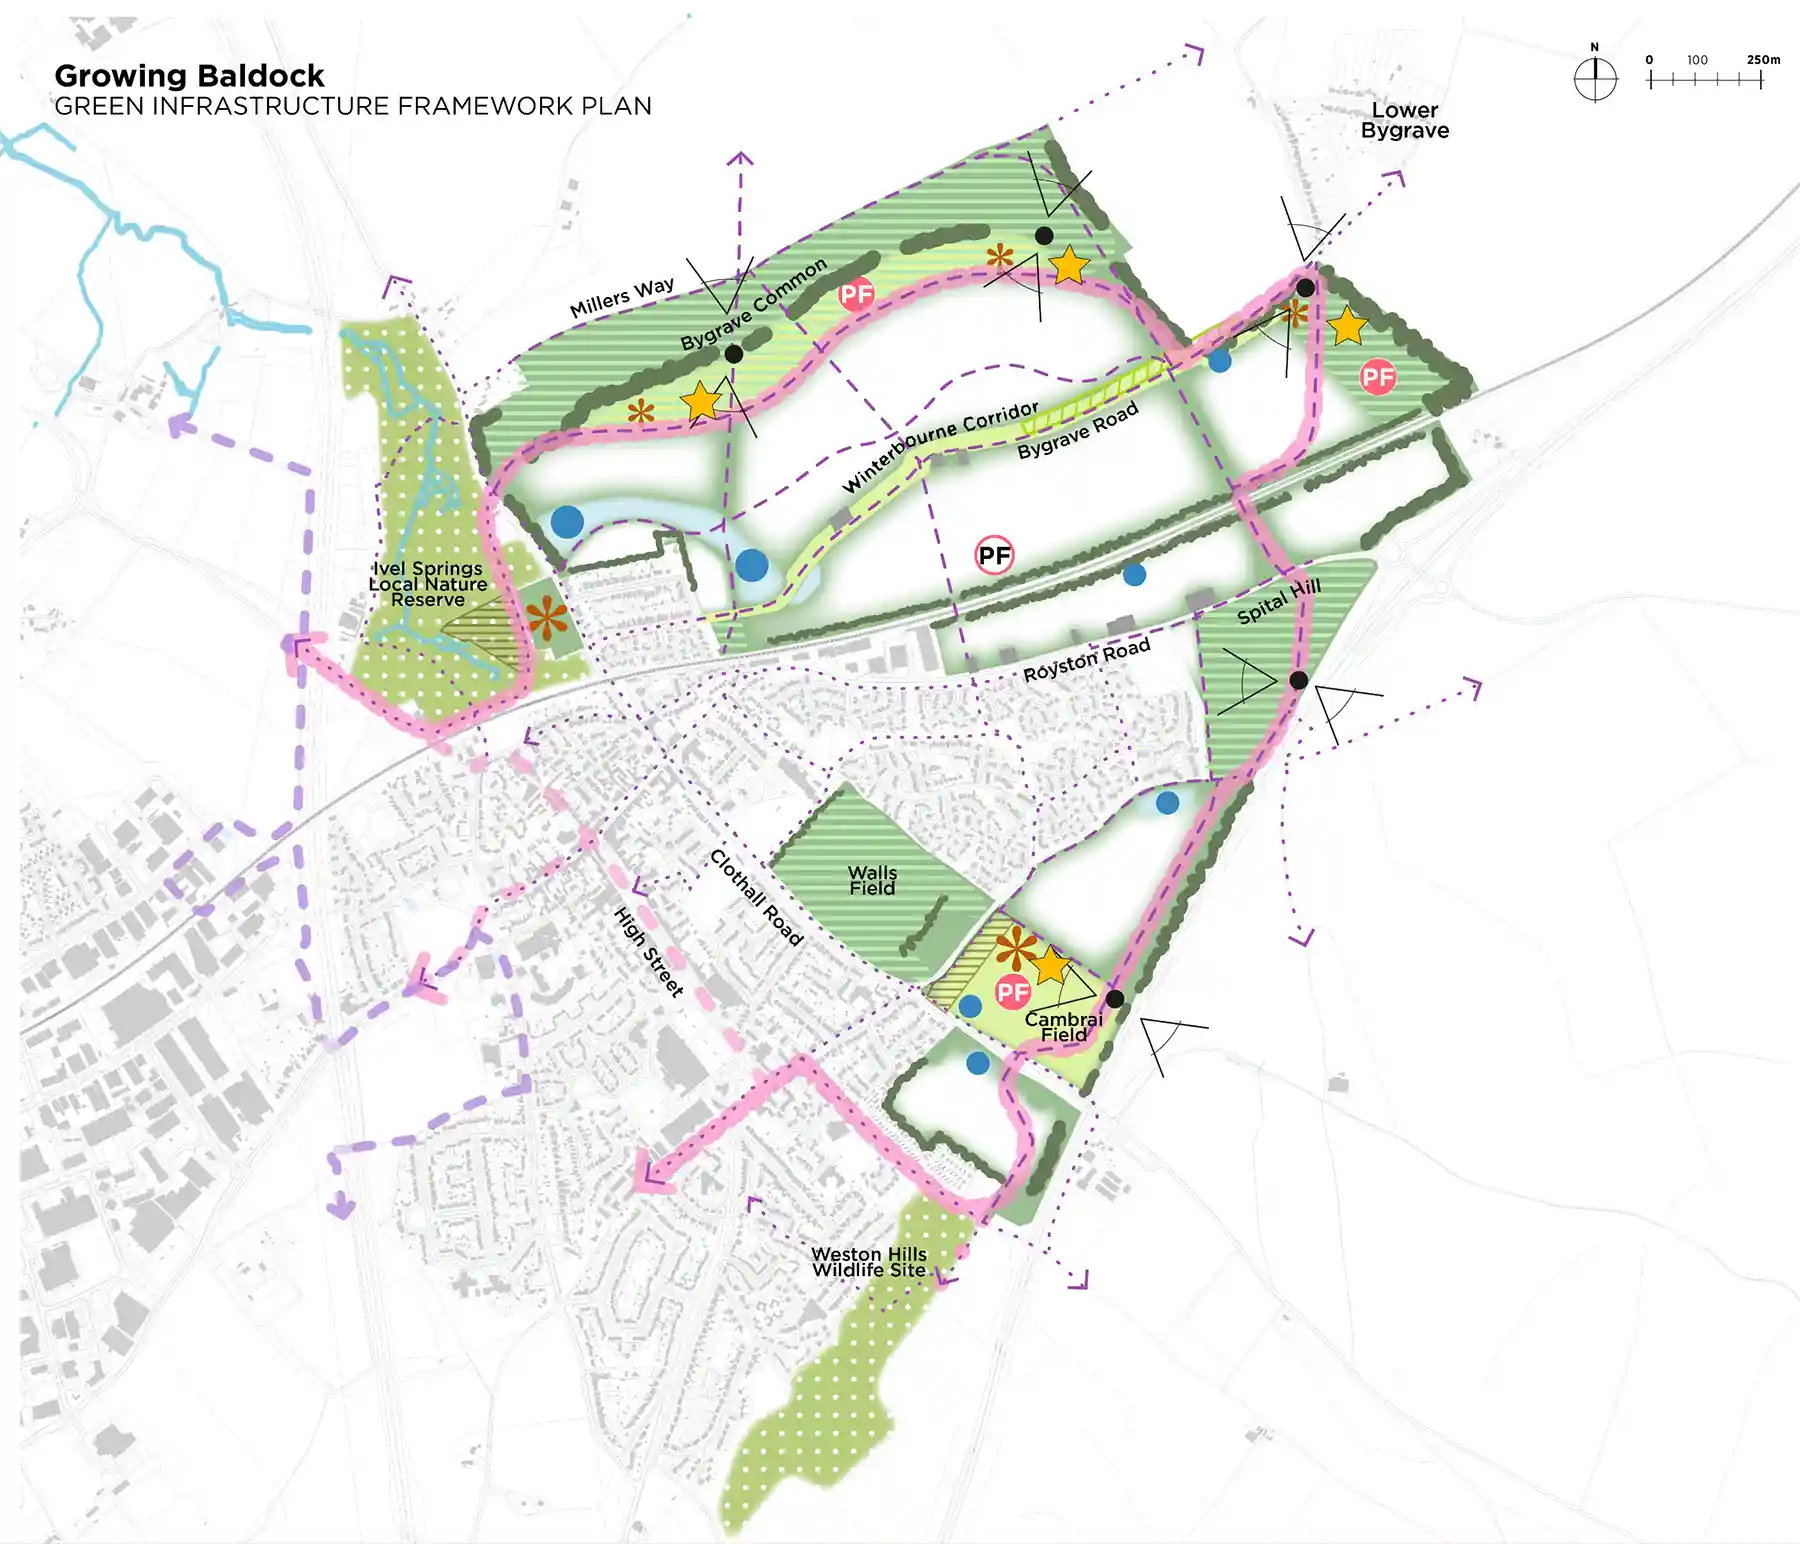 Map of Baldock showing the green infrastructure framework